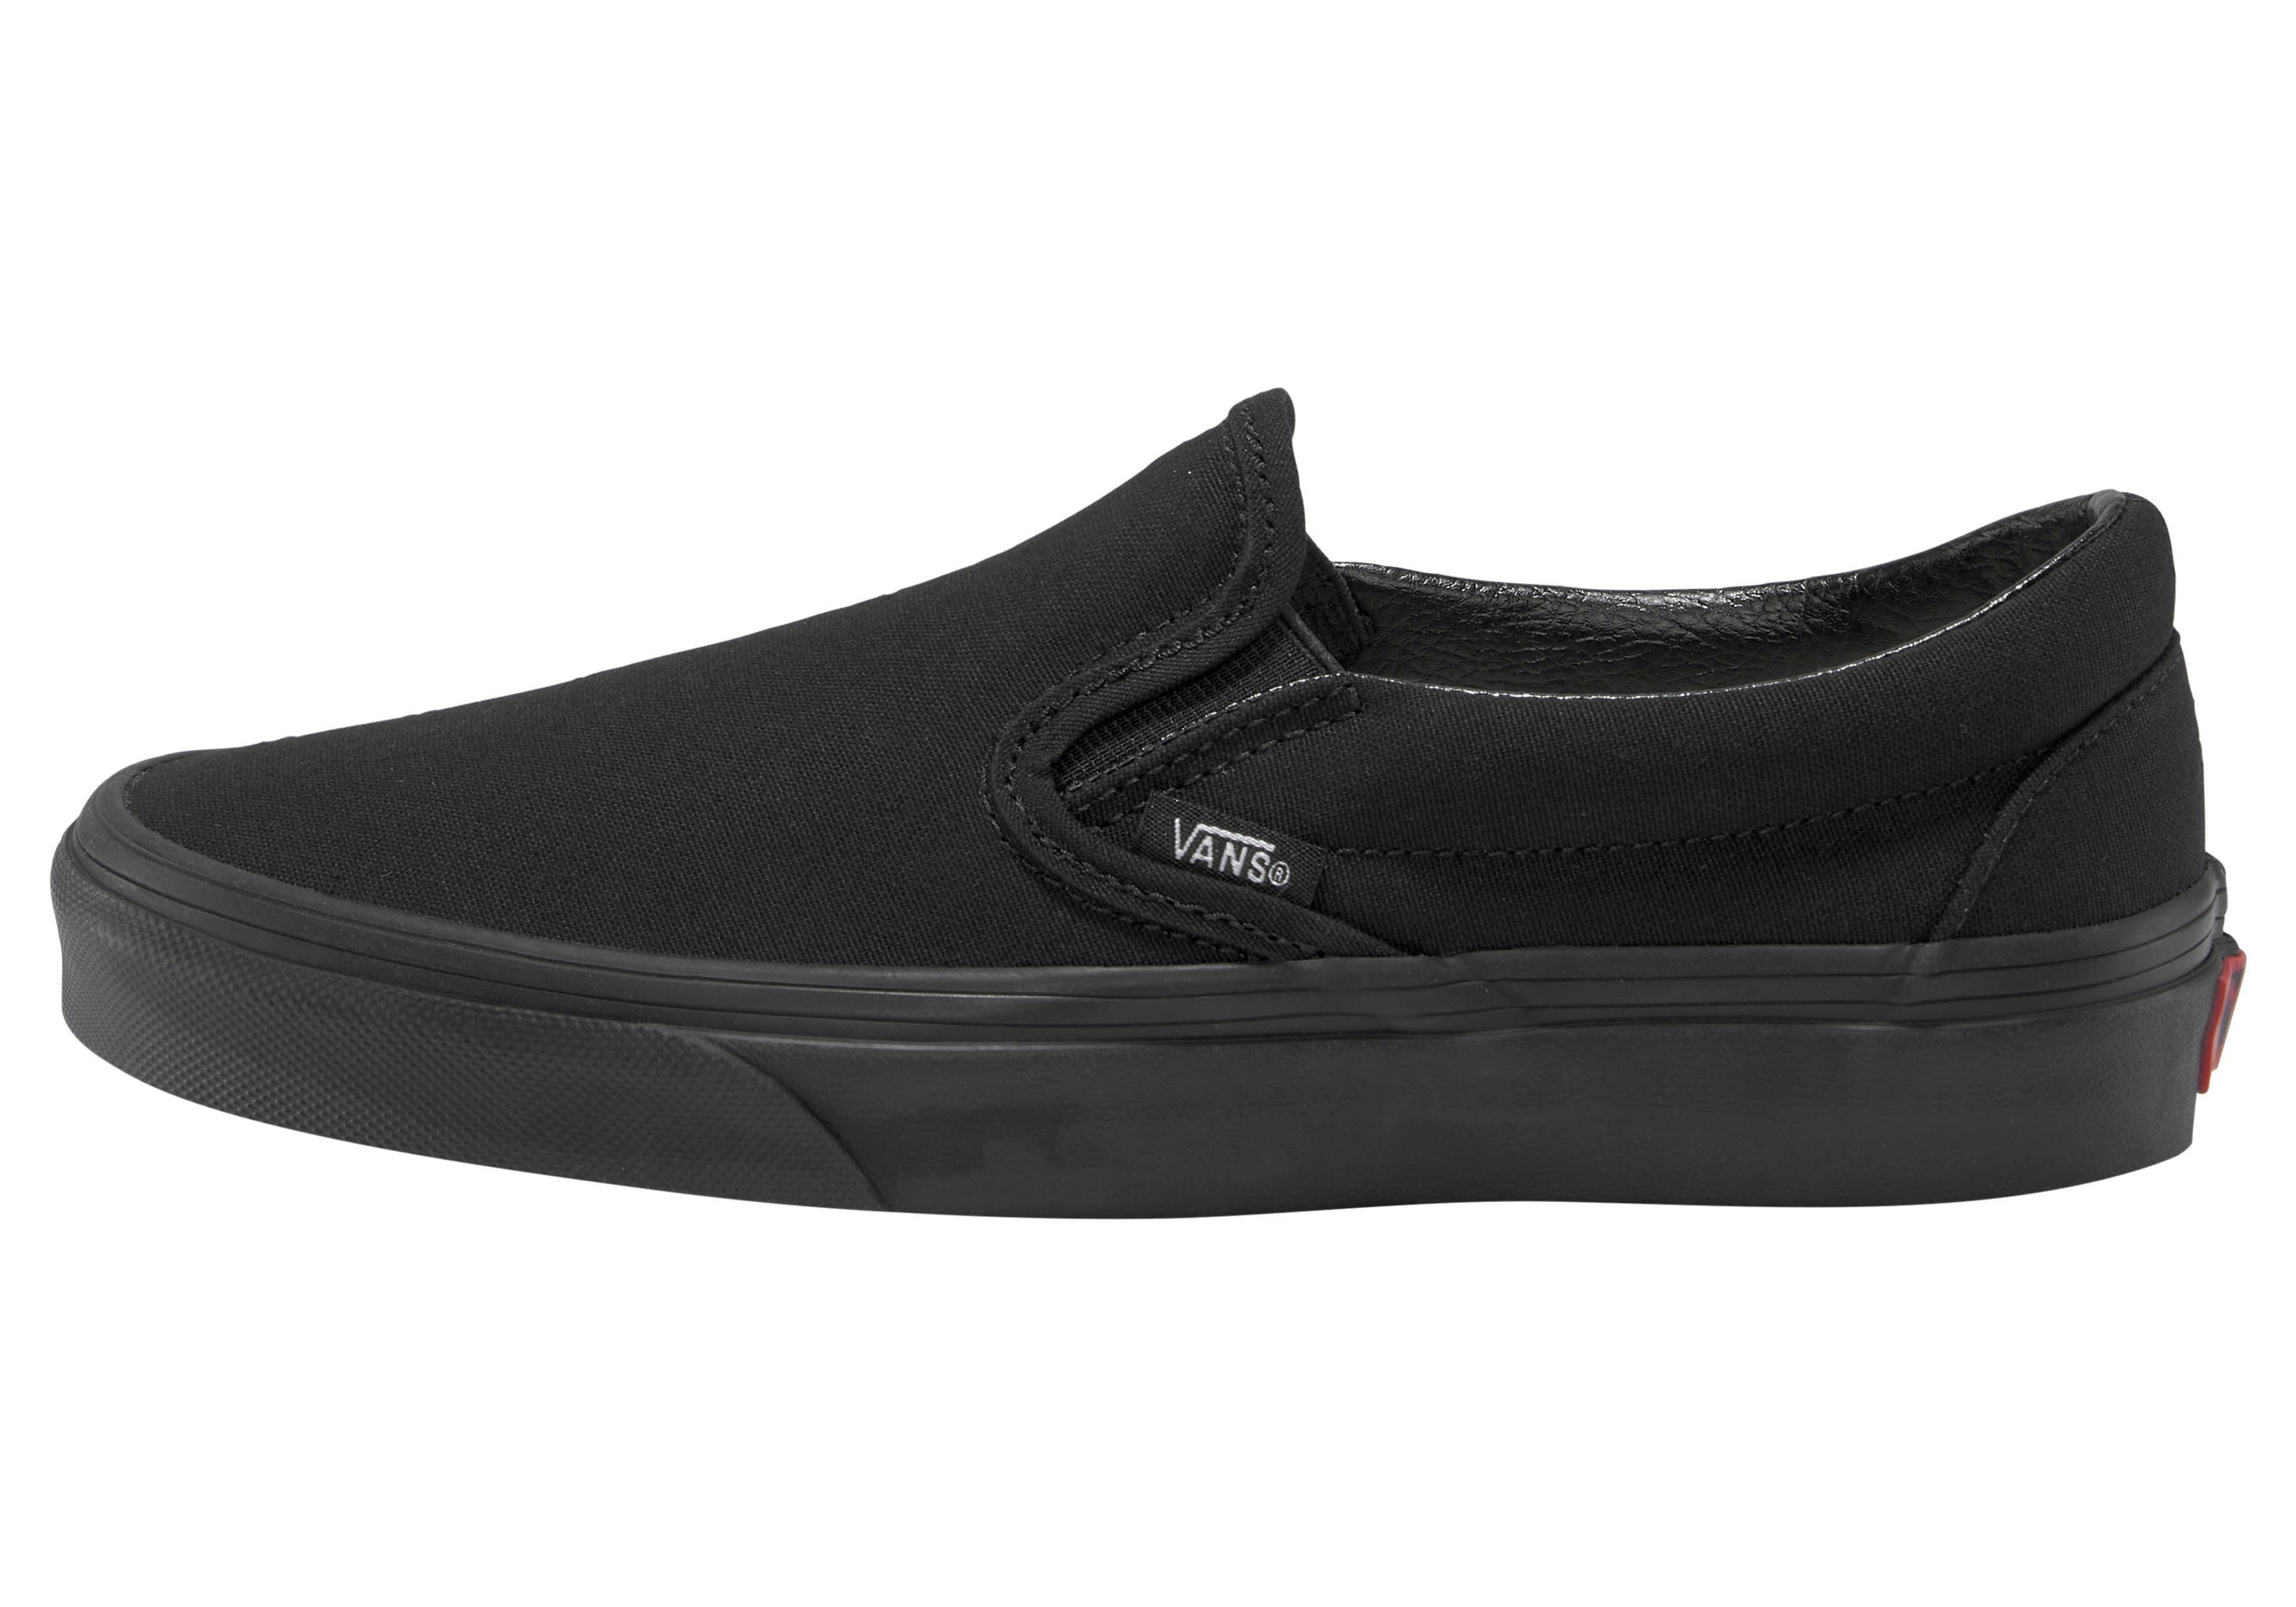 Vans Classic Slip-On Slip-On Sneaker online kaufen | OTTO